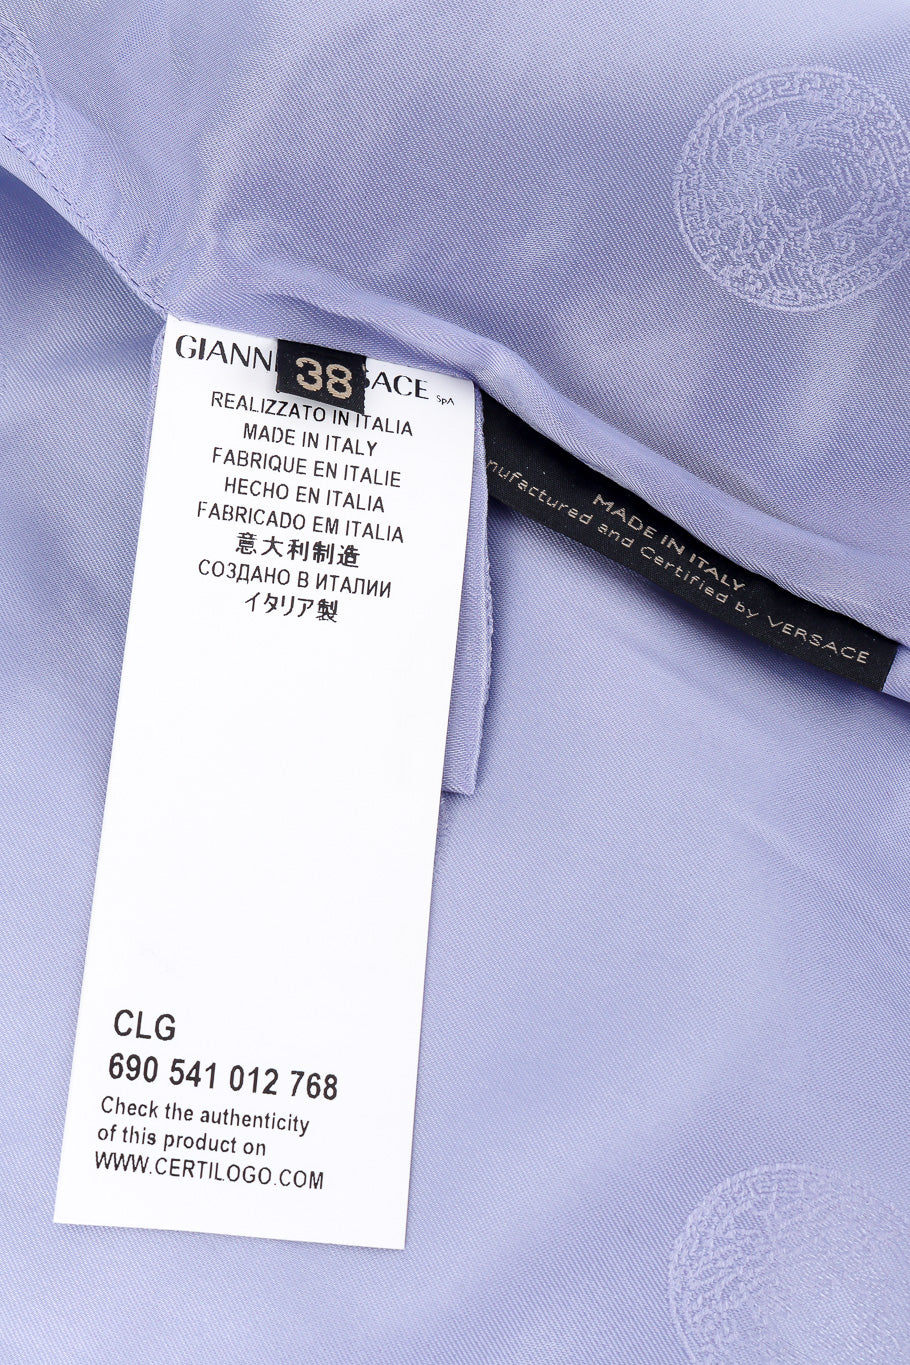 Versace Embossed Leather Pencil Skirt fabric content label closeup @Recessla